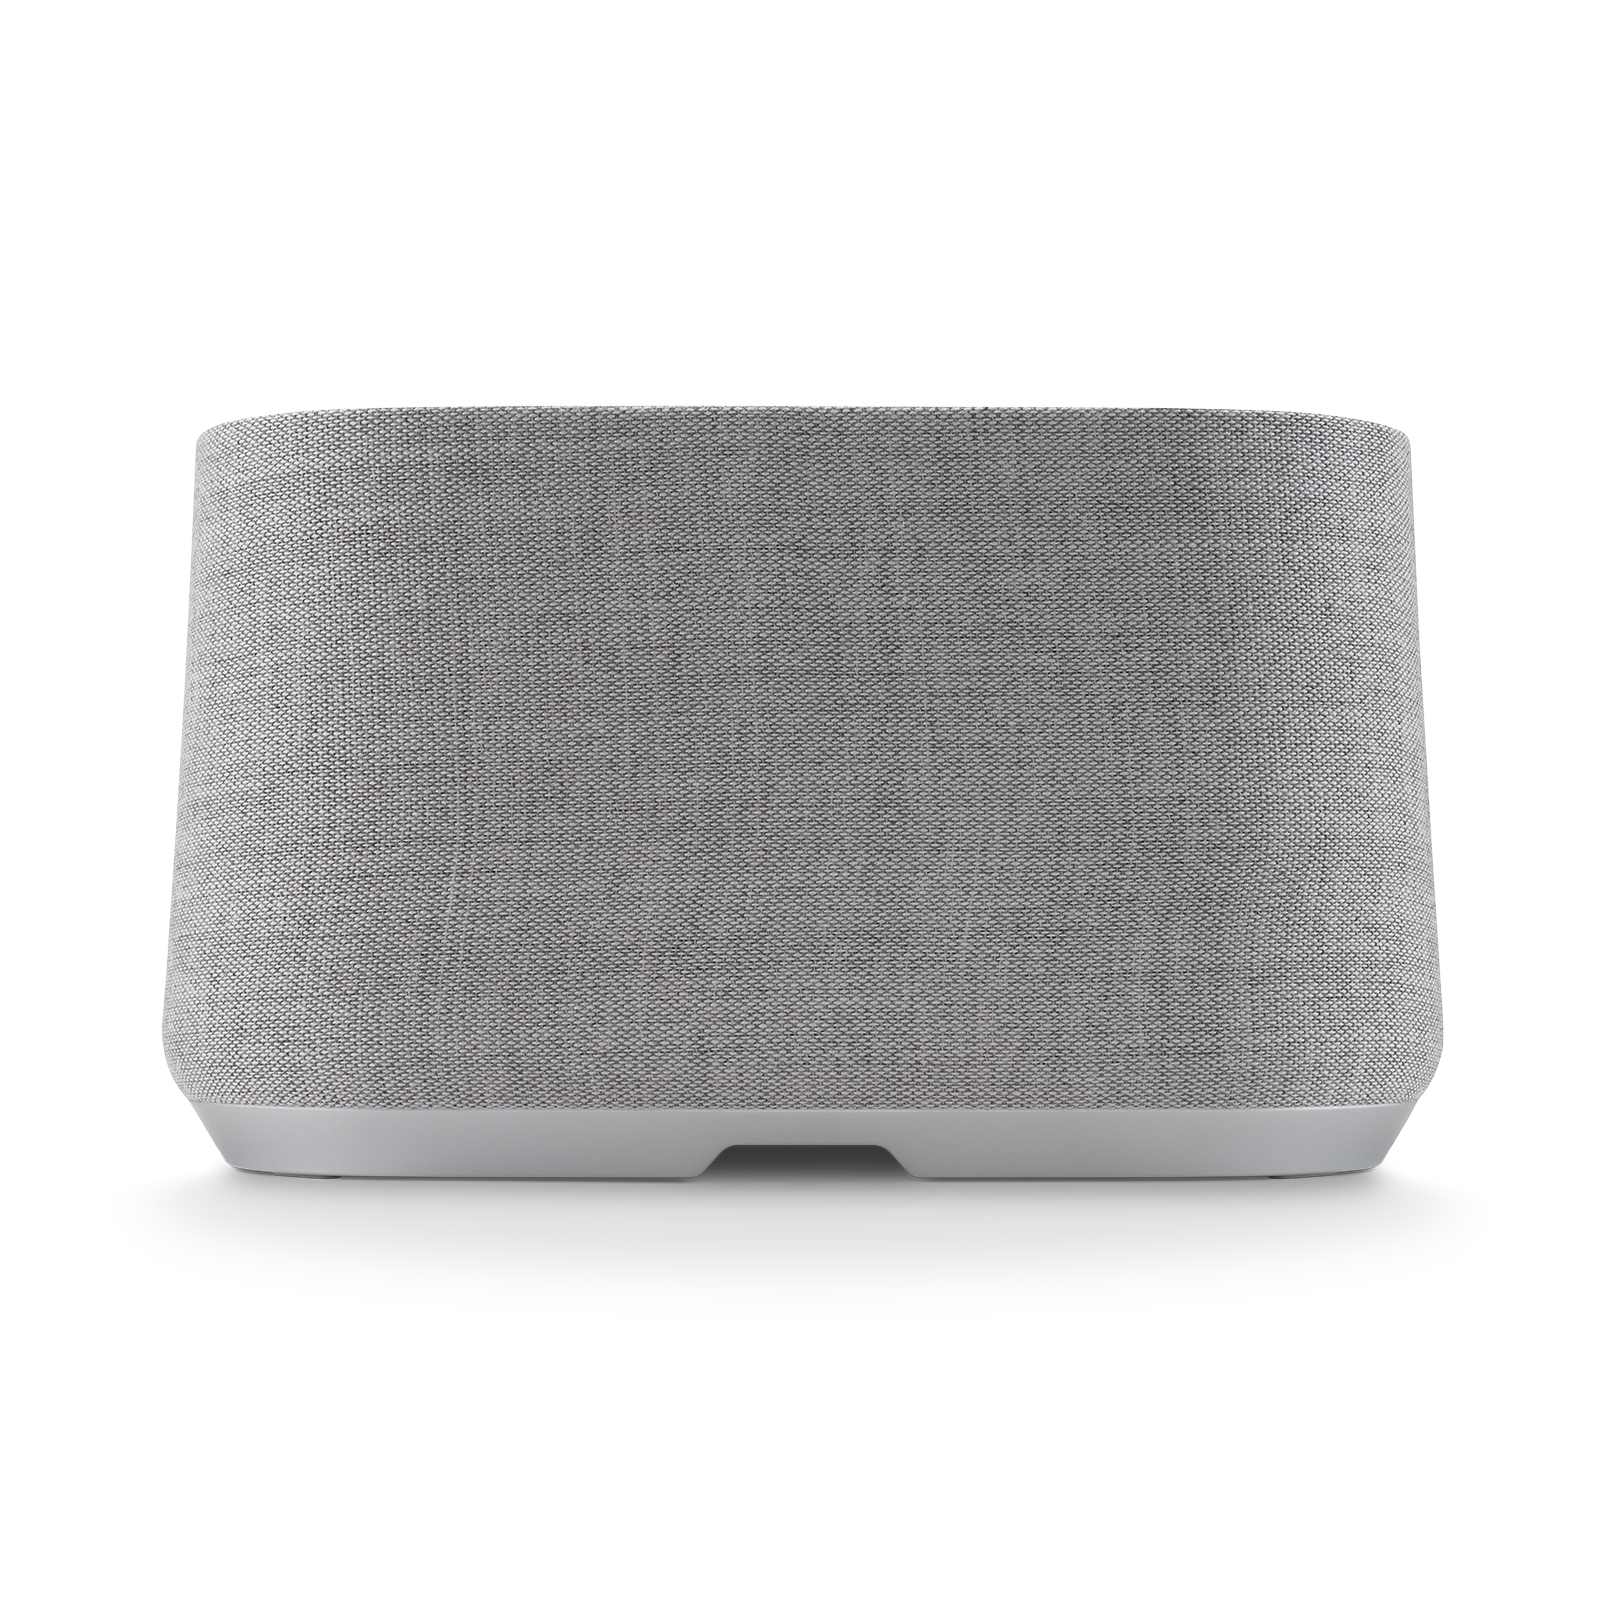 Harman Kardon Citation 300 - Grey - The medium-size smart home speaker with award winning design - Back